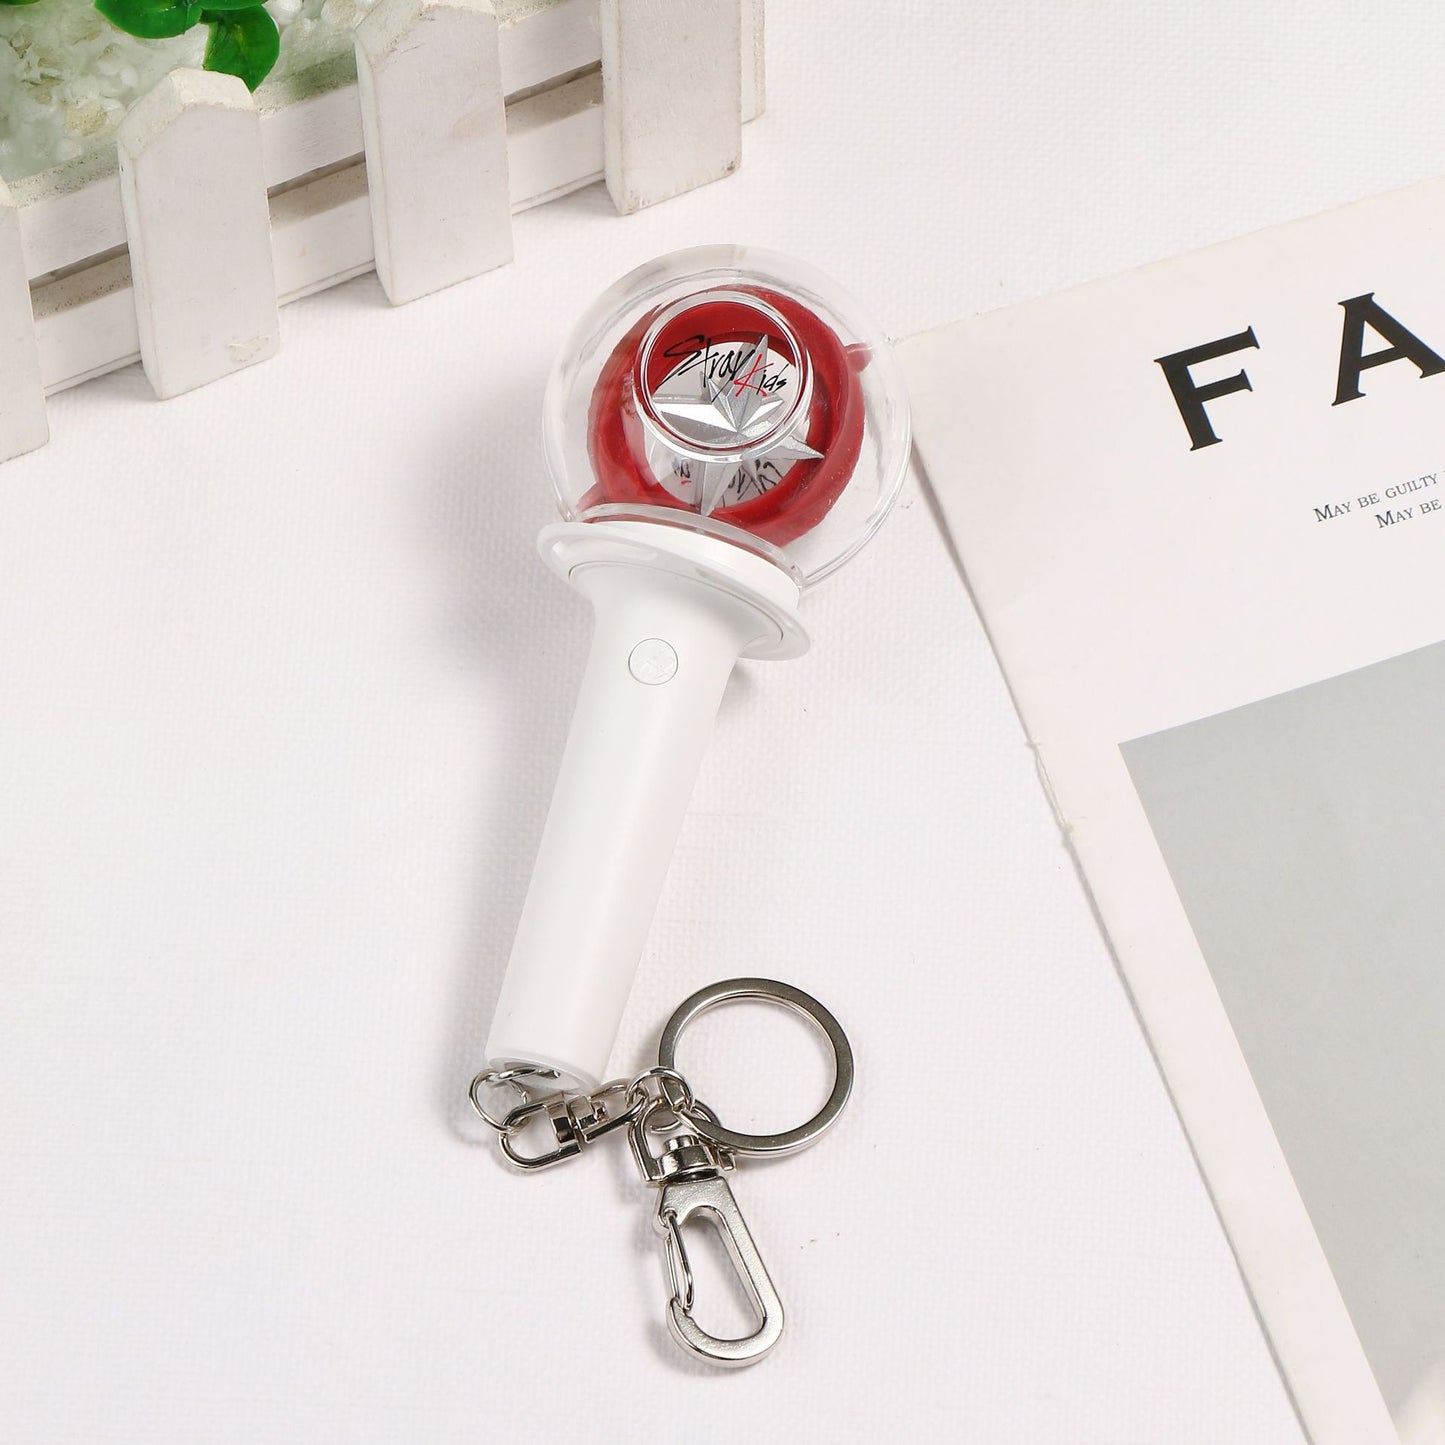 Stray kids -  lightstick Mini  keychain